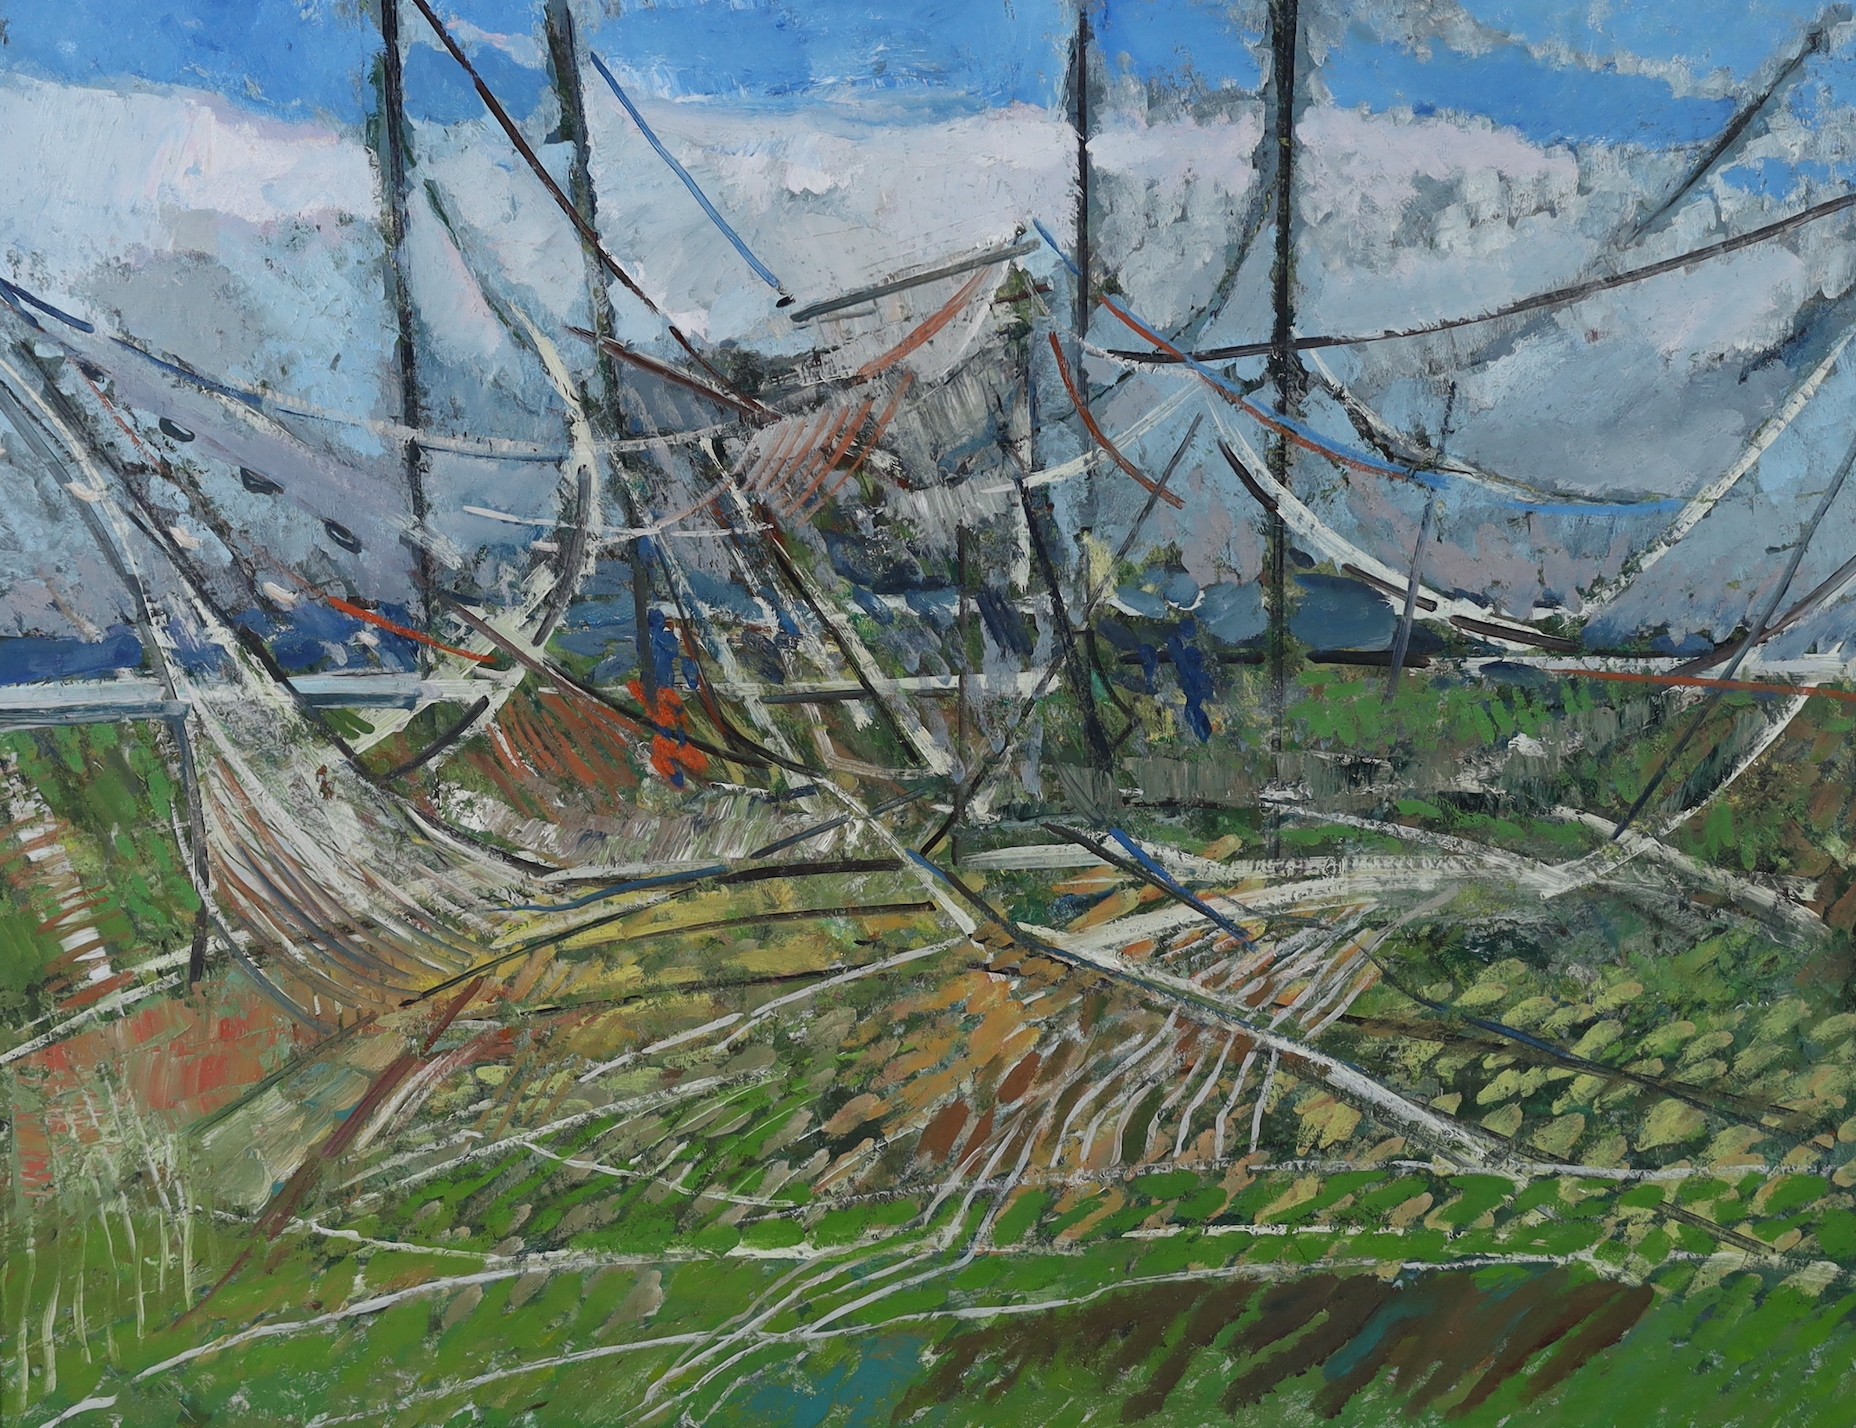 Peter Coker RA (1926-2004), 'Salmon Nets No.7', oil on canvas, 114 x 146cm